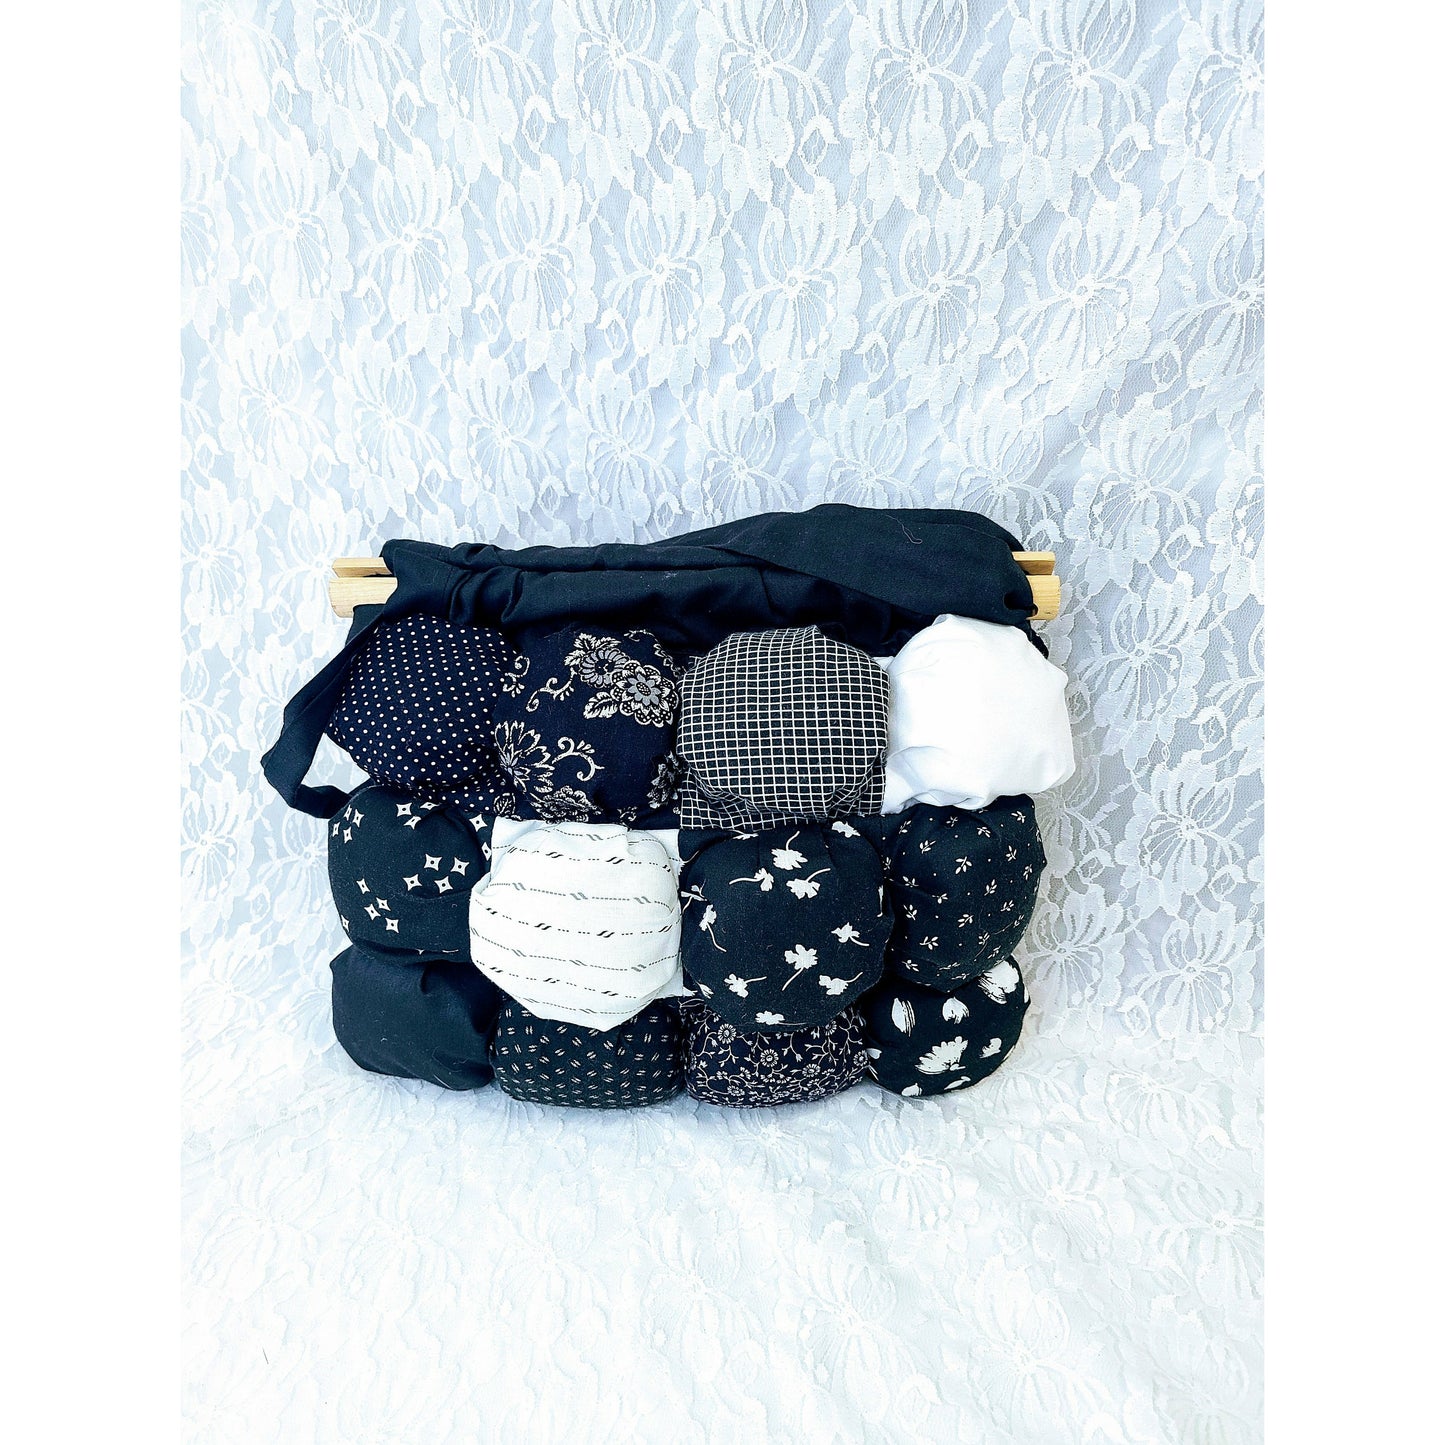 Handmade Purse ~ QUILTED Vintage Style Shoulder Bag Handbag ~ Perfect for Phone and Essentials ~ OOAK Satchel